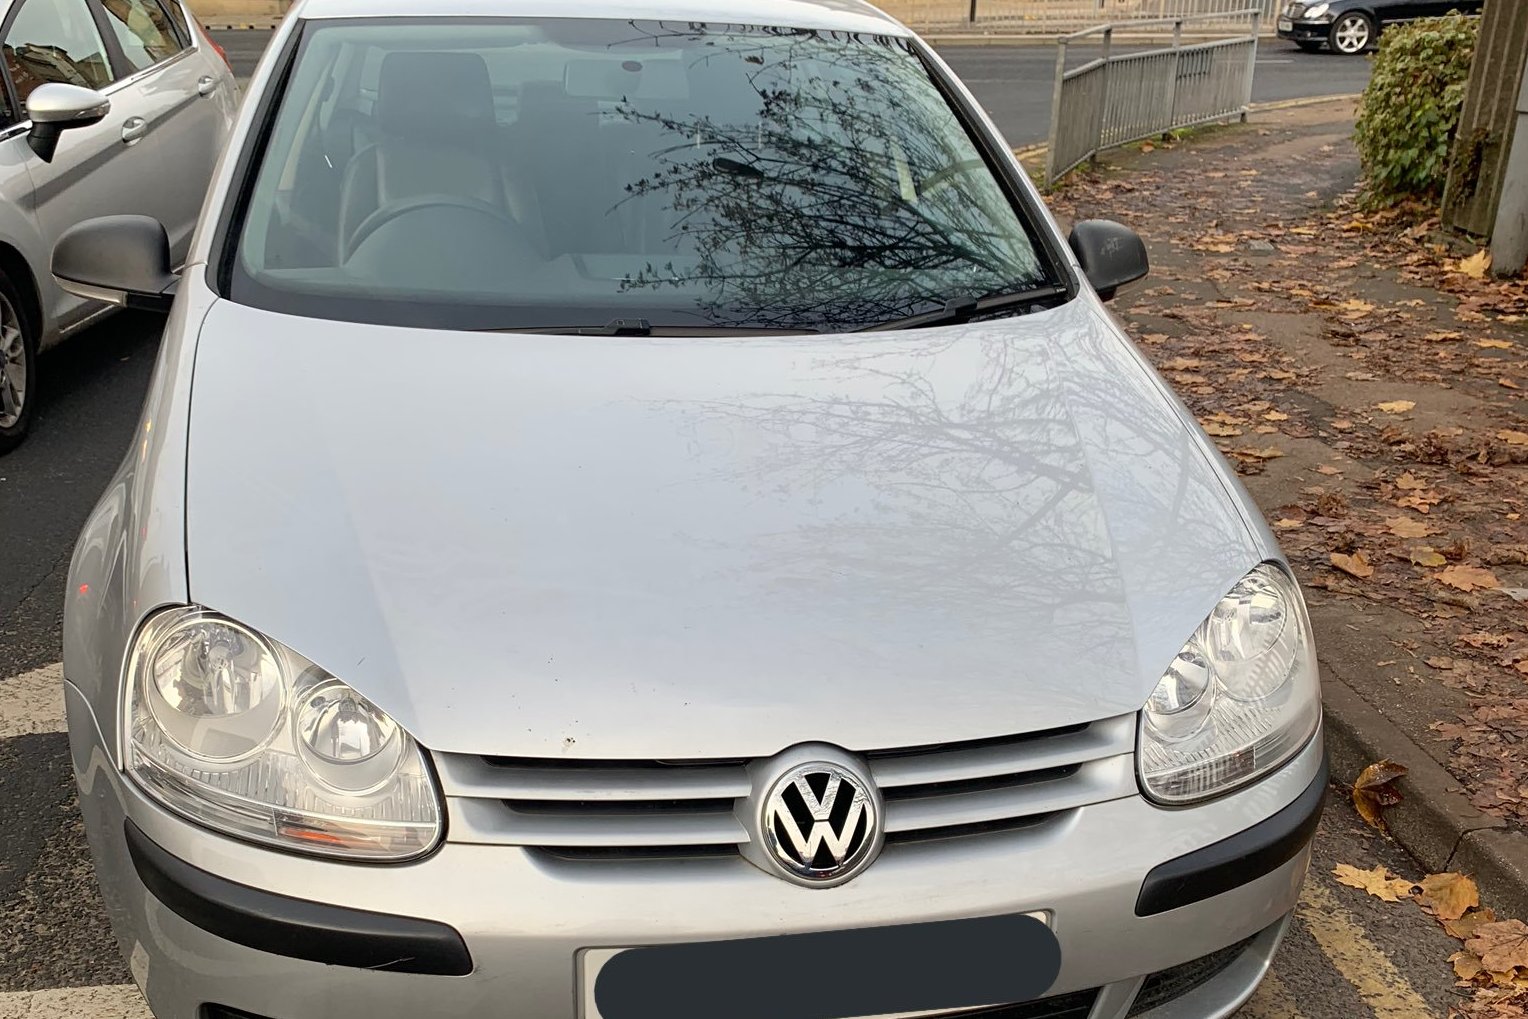 Broken down Leeds Road VW Golf seized for no insurance